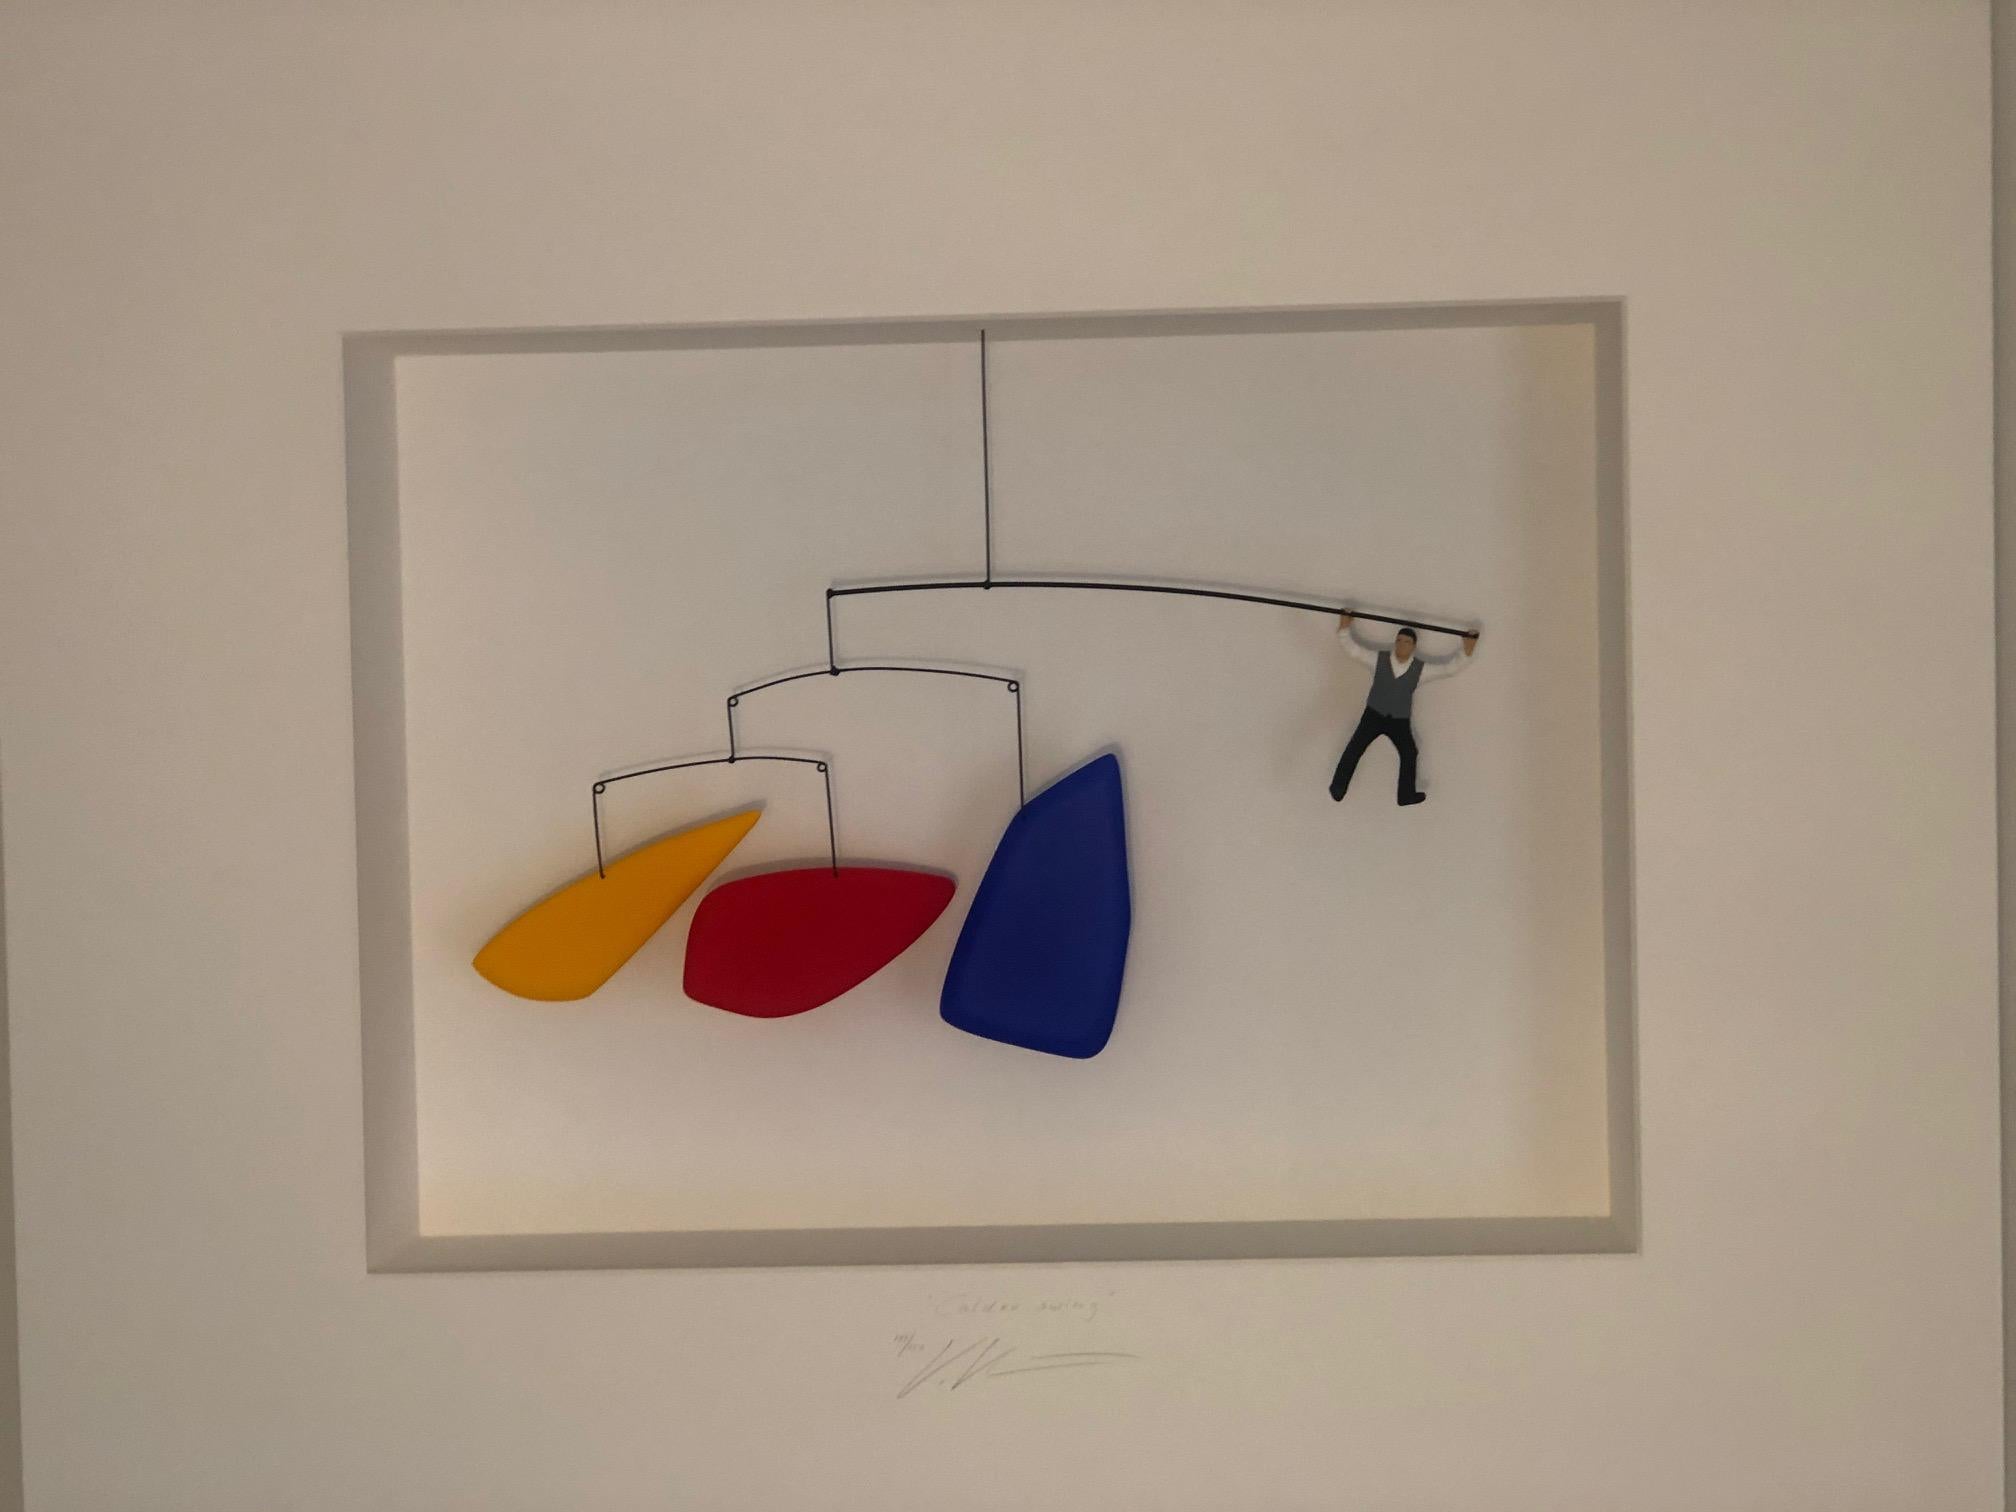 Homage to Calder - contemporary art work, design tribute to Alexander Calder  - Assemblage Mixed Media Art by Volker Kuhn